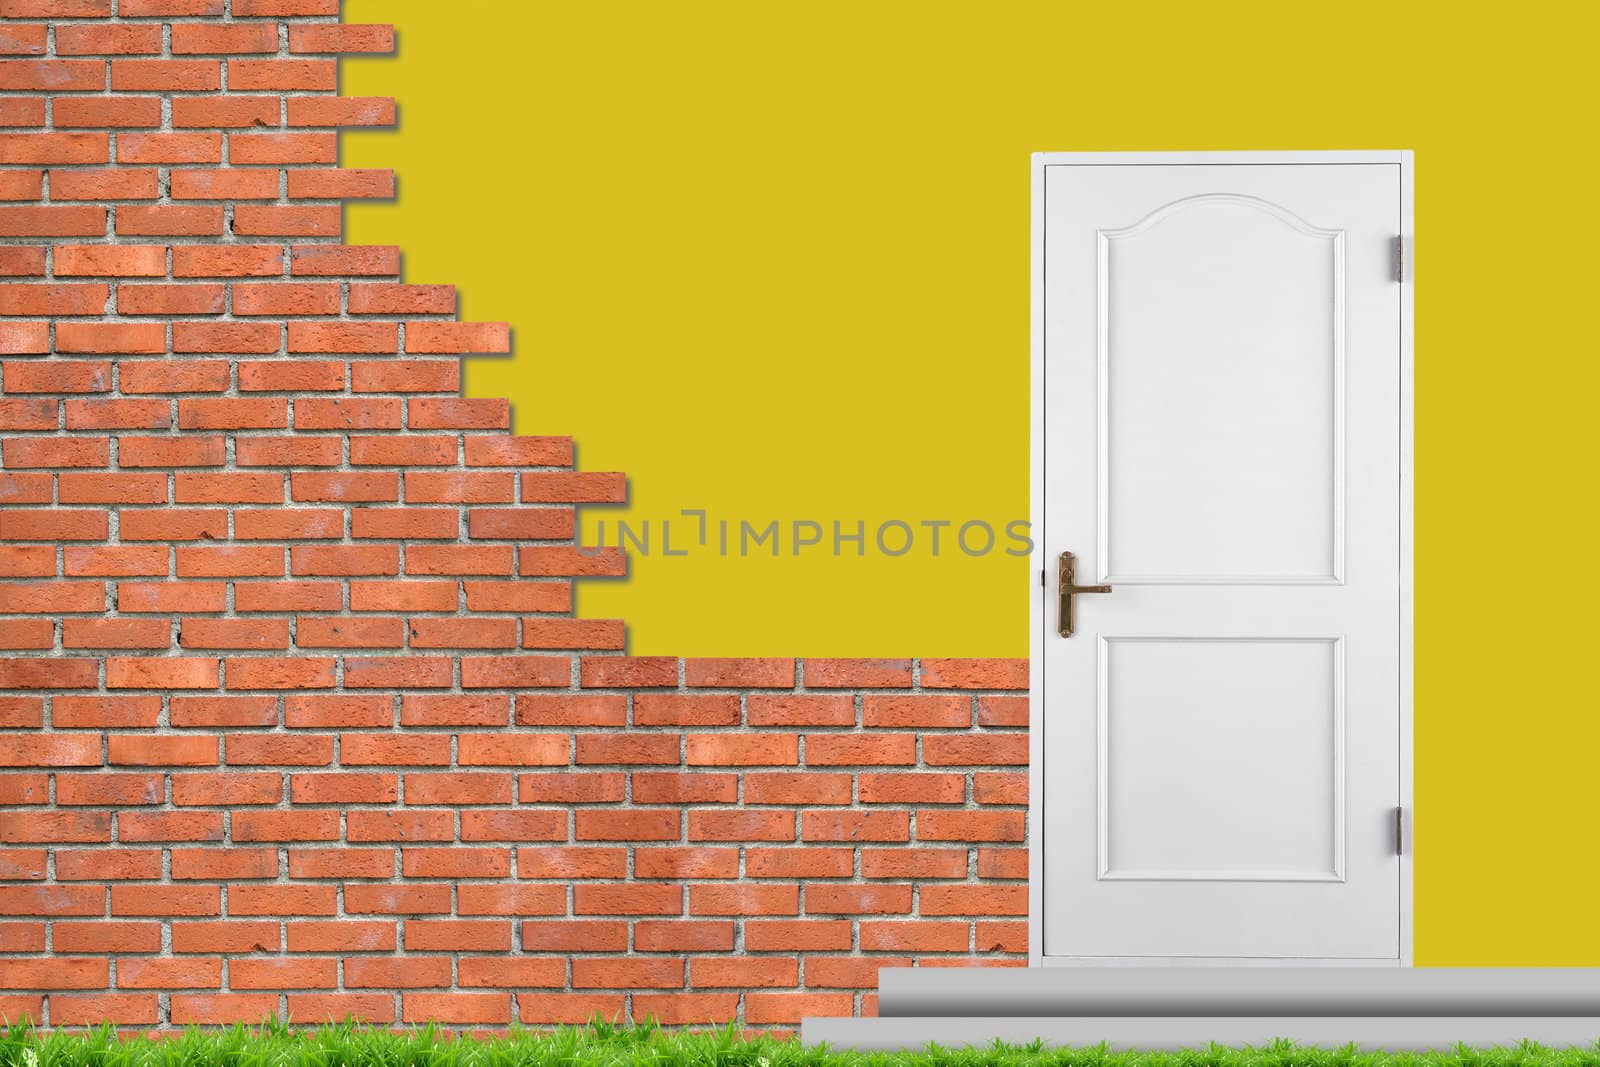 Brick wall by petrkurgan